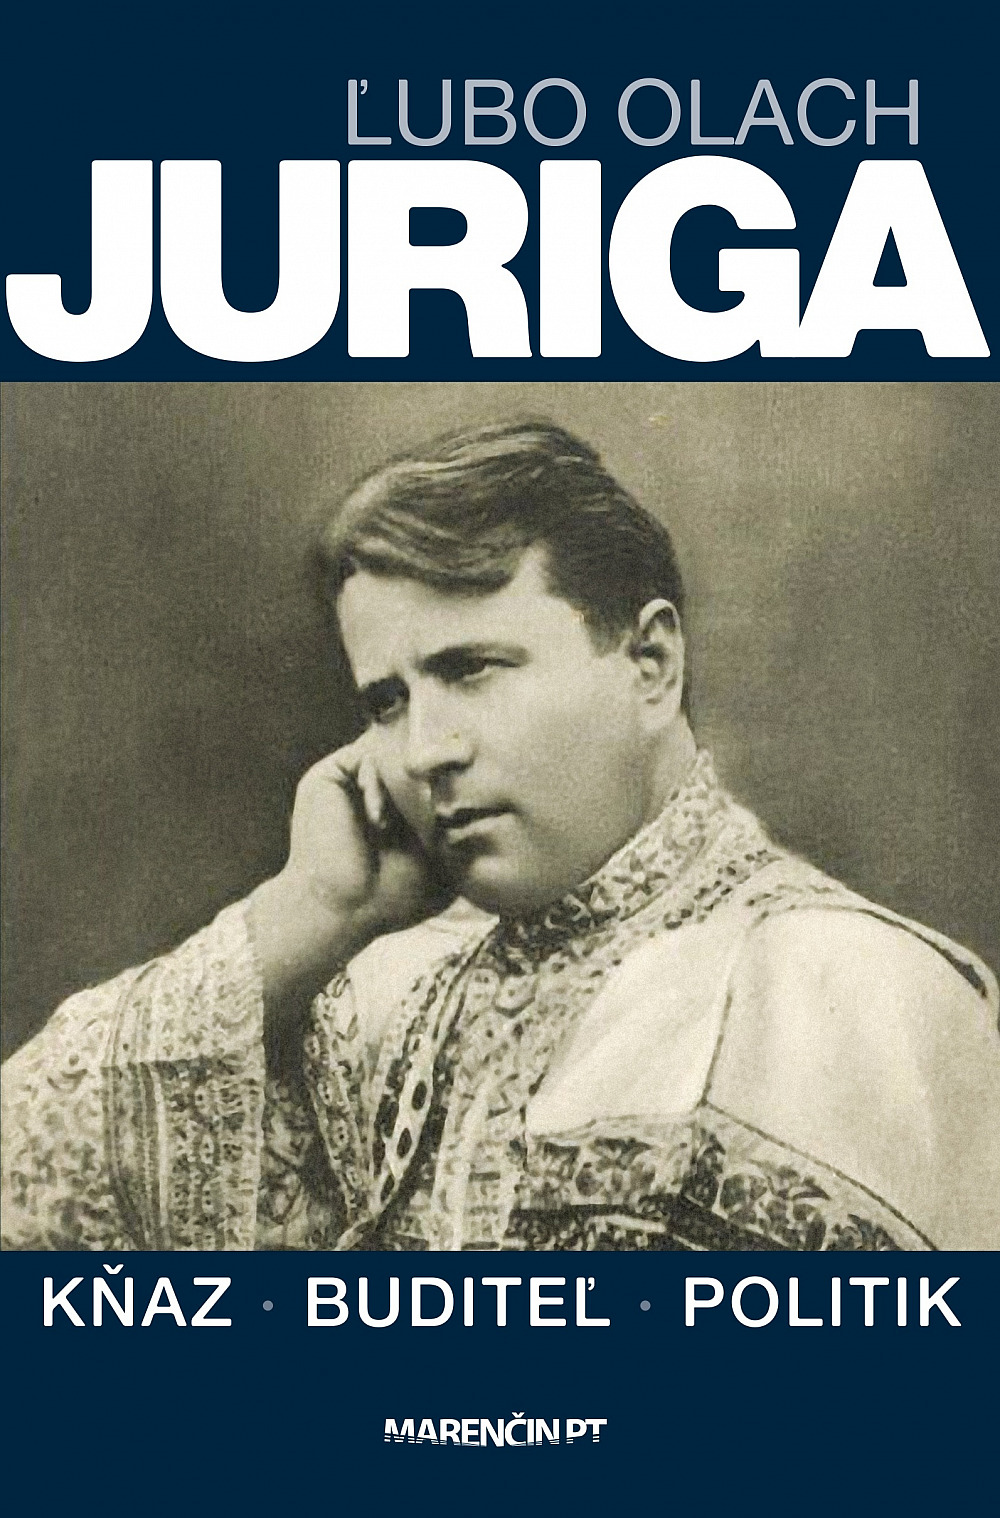 Juriga - kňaz, buditeľ, politik